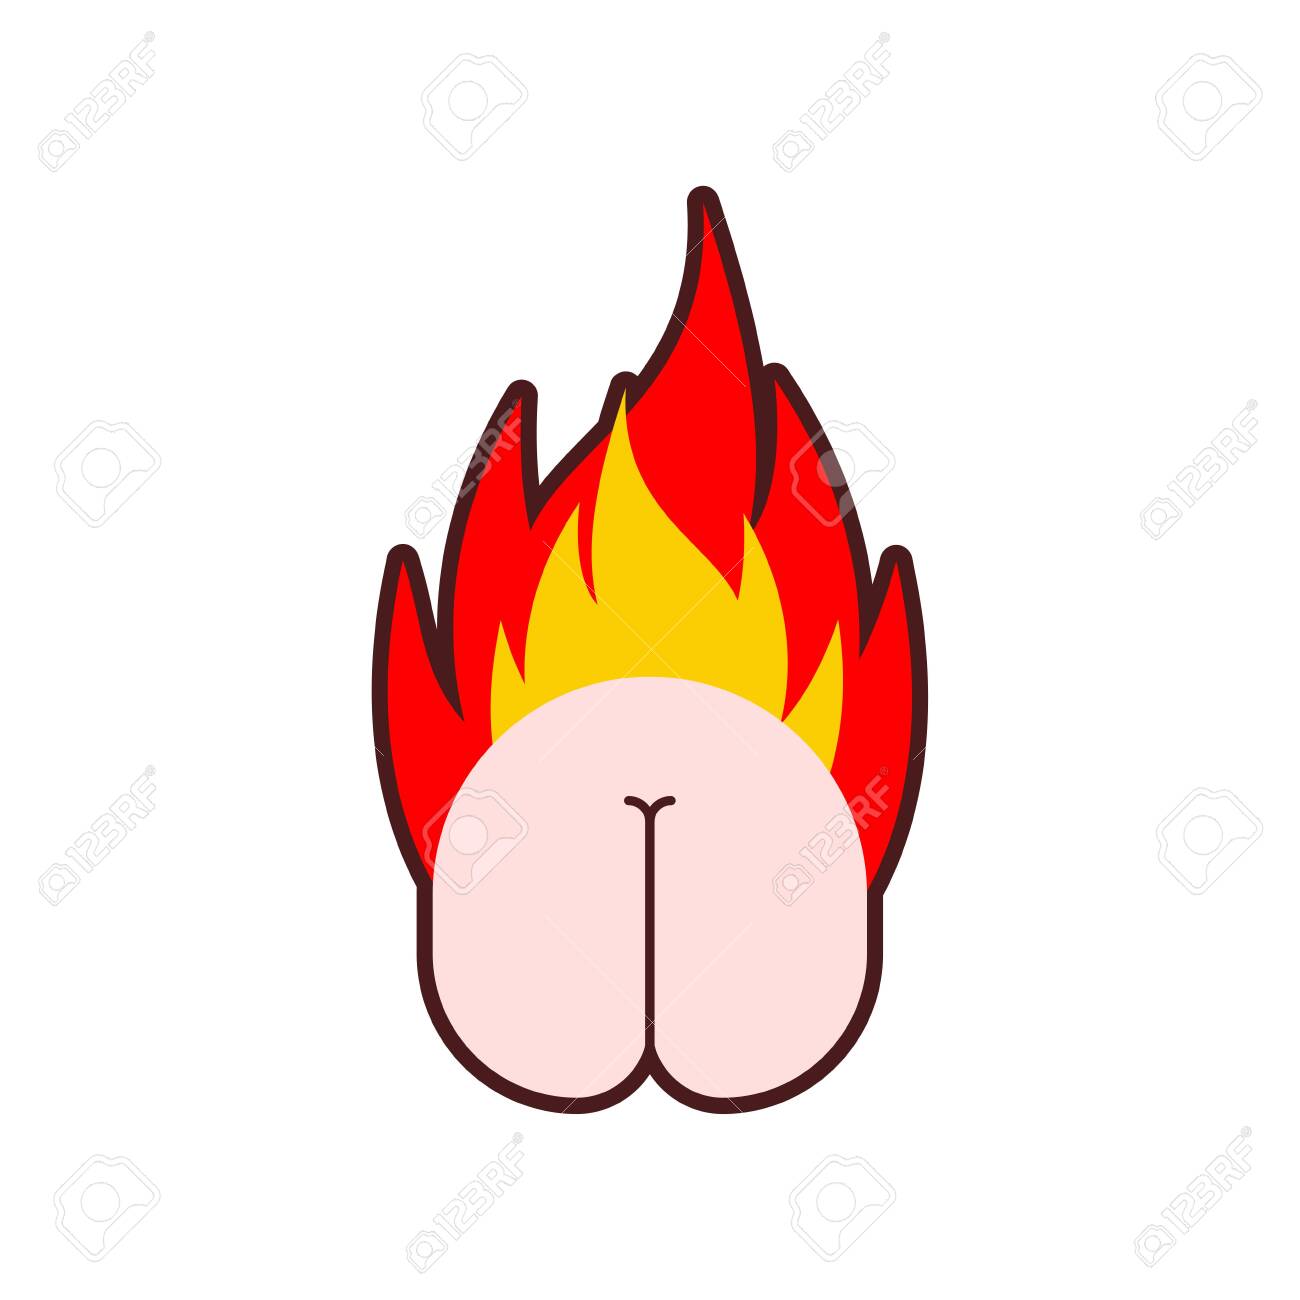 137666087-butthurt-sign-butt-hurt-icon-on-fire-symbol-irritability-emblem-vector-illustration.jpg